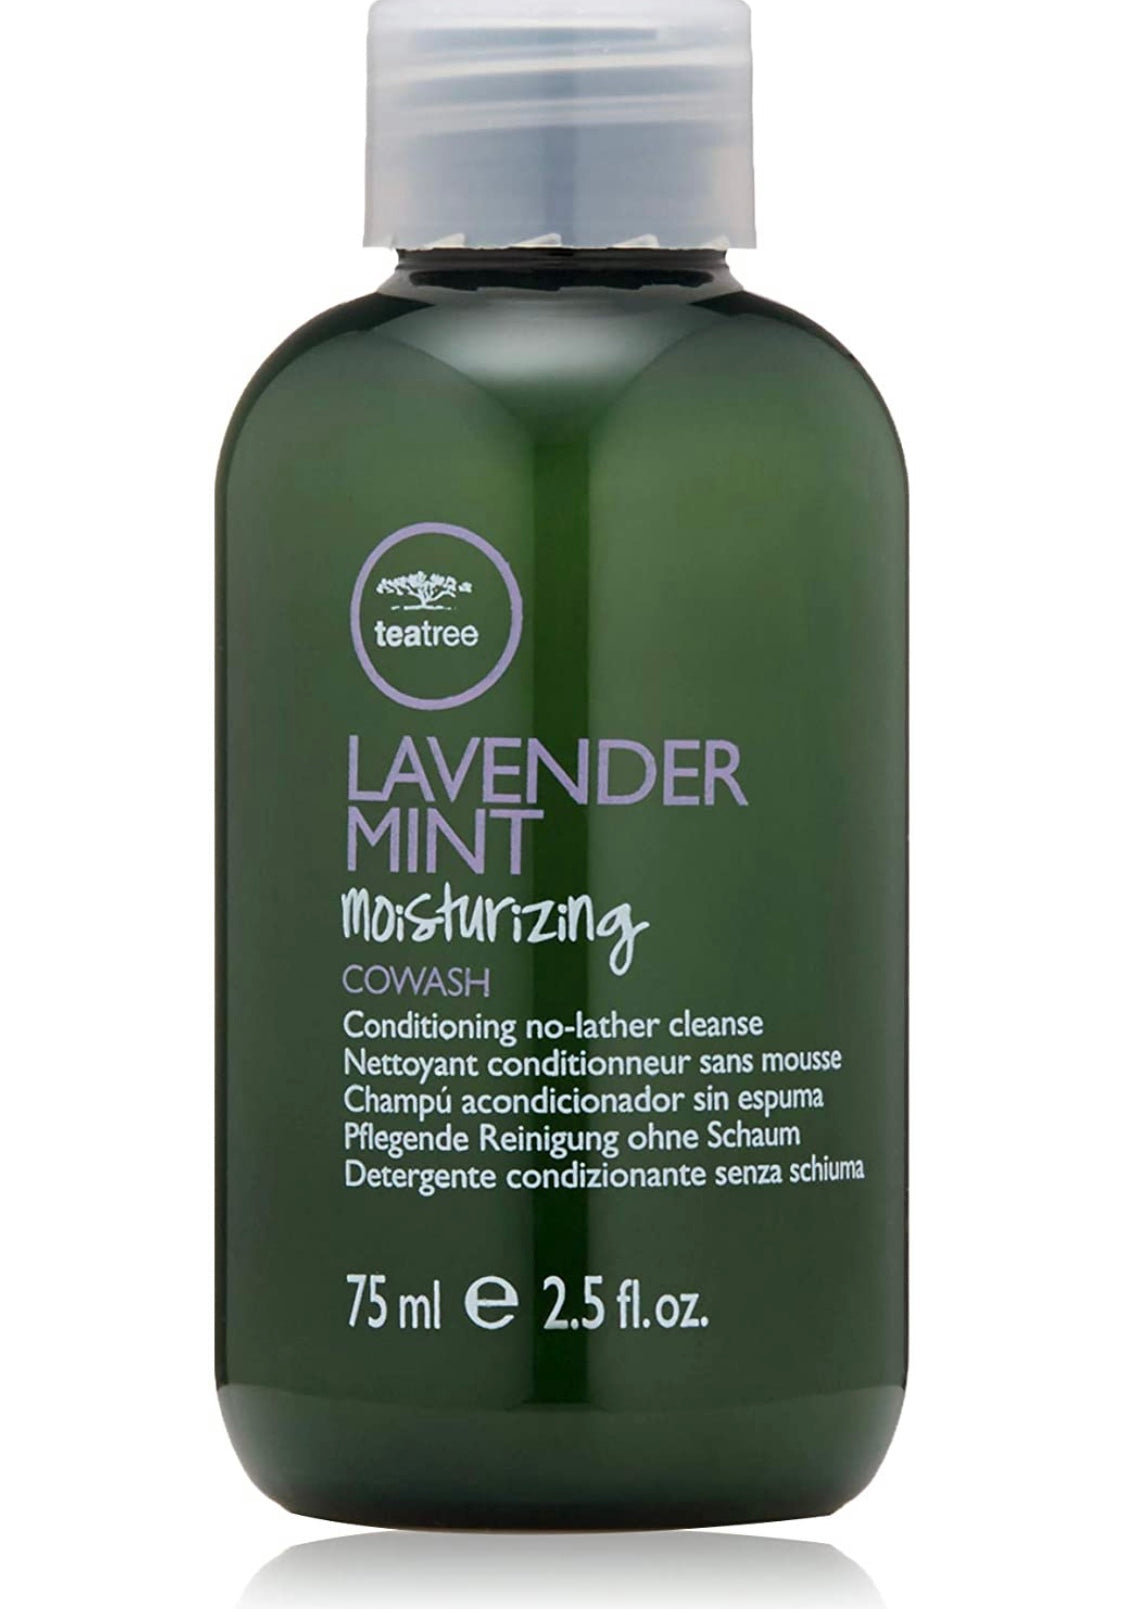 TeaTree - Lavender mint moisturizing cowash 2.5 fl. oz./ 75 ml